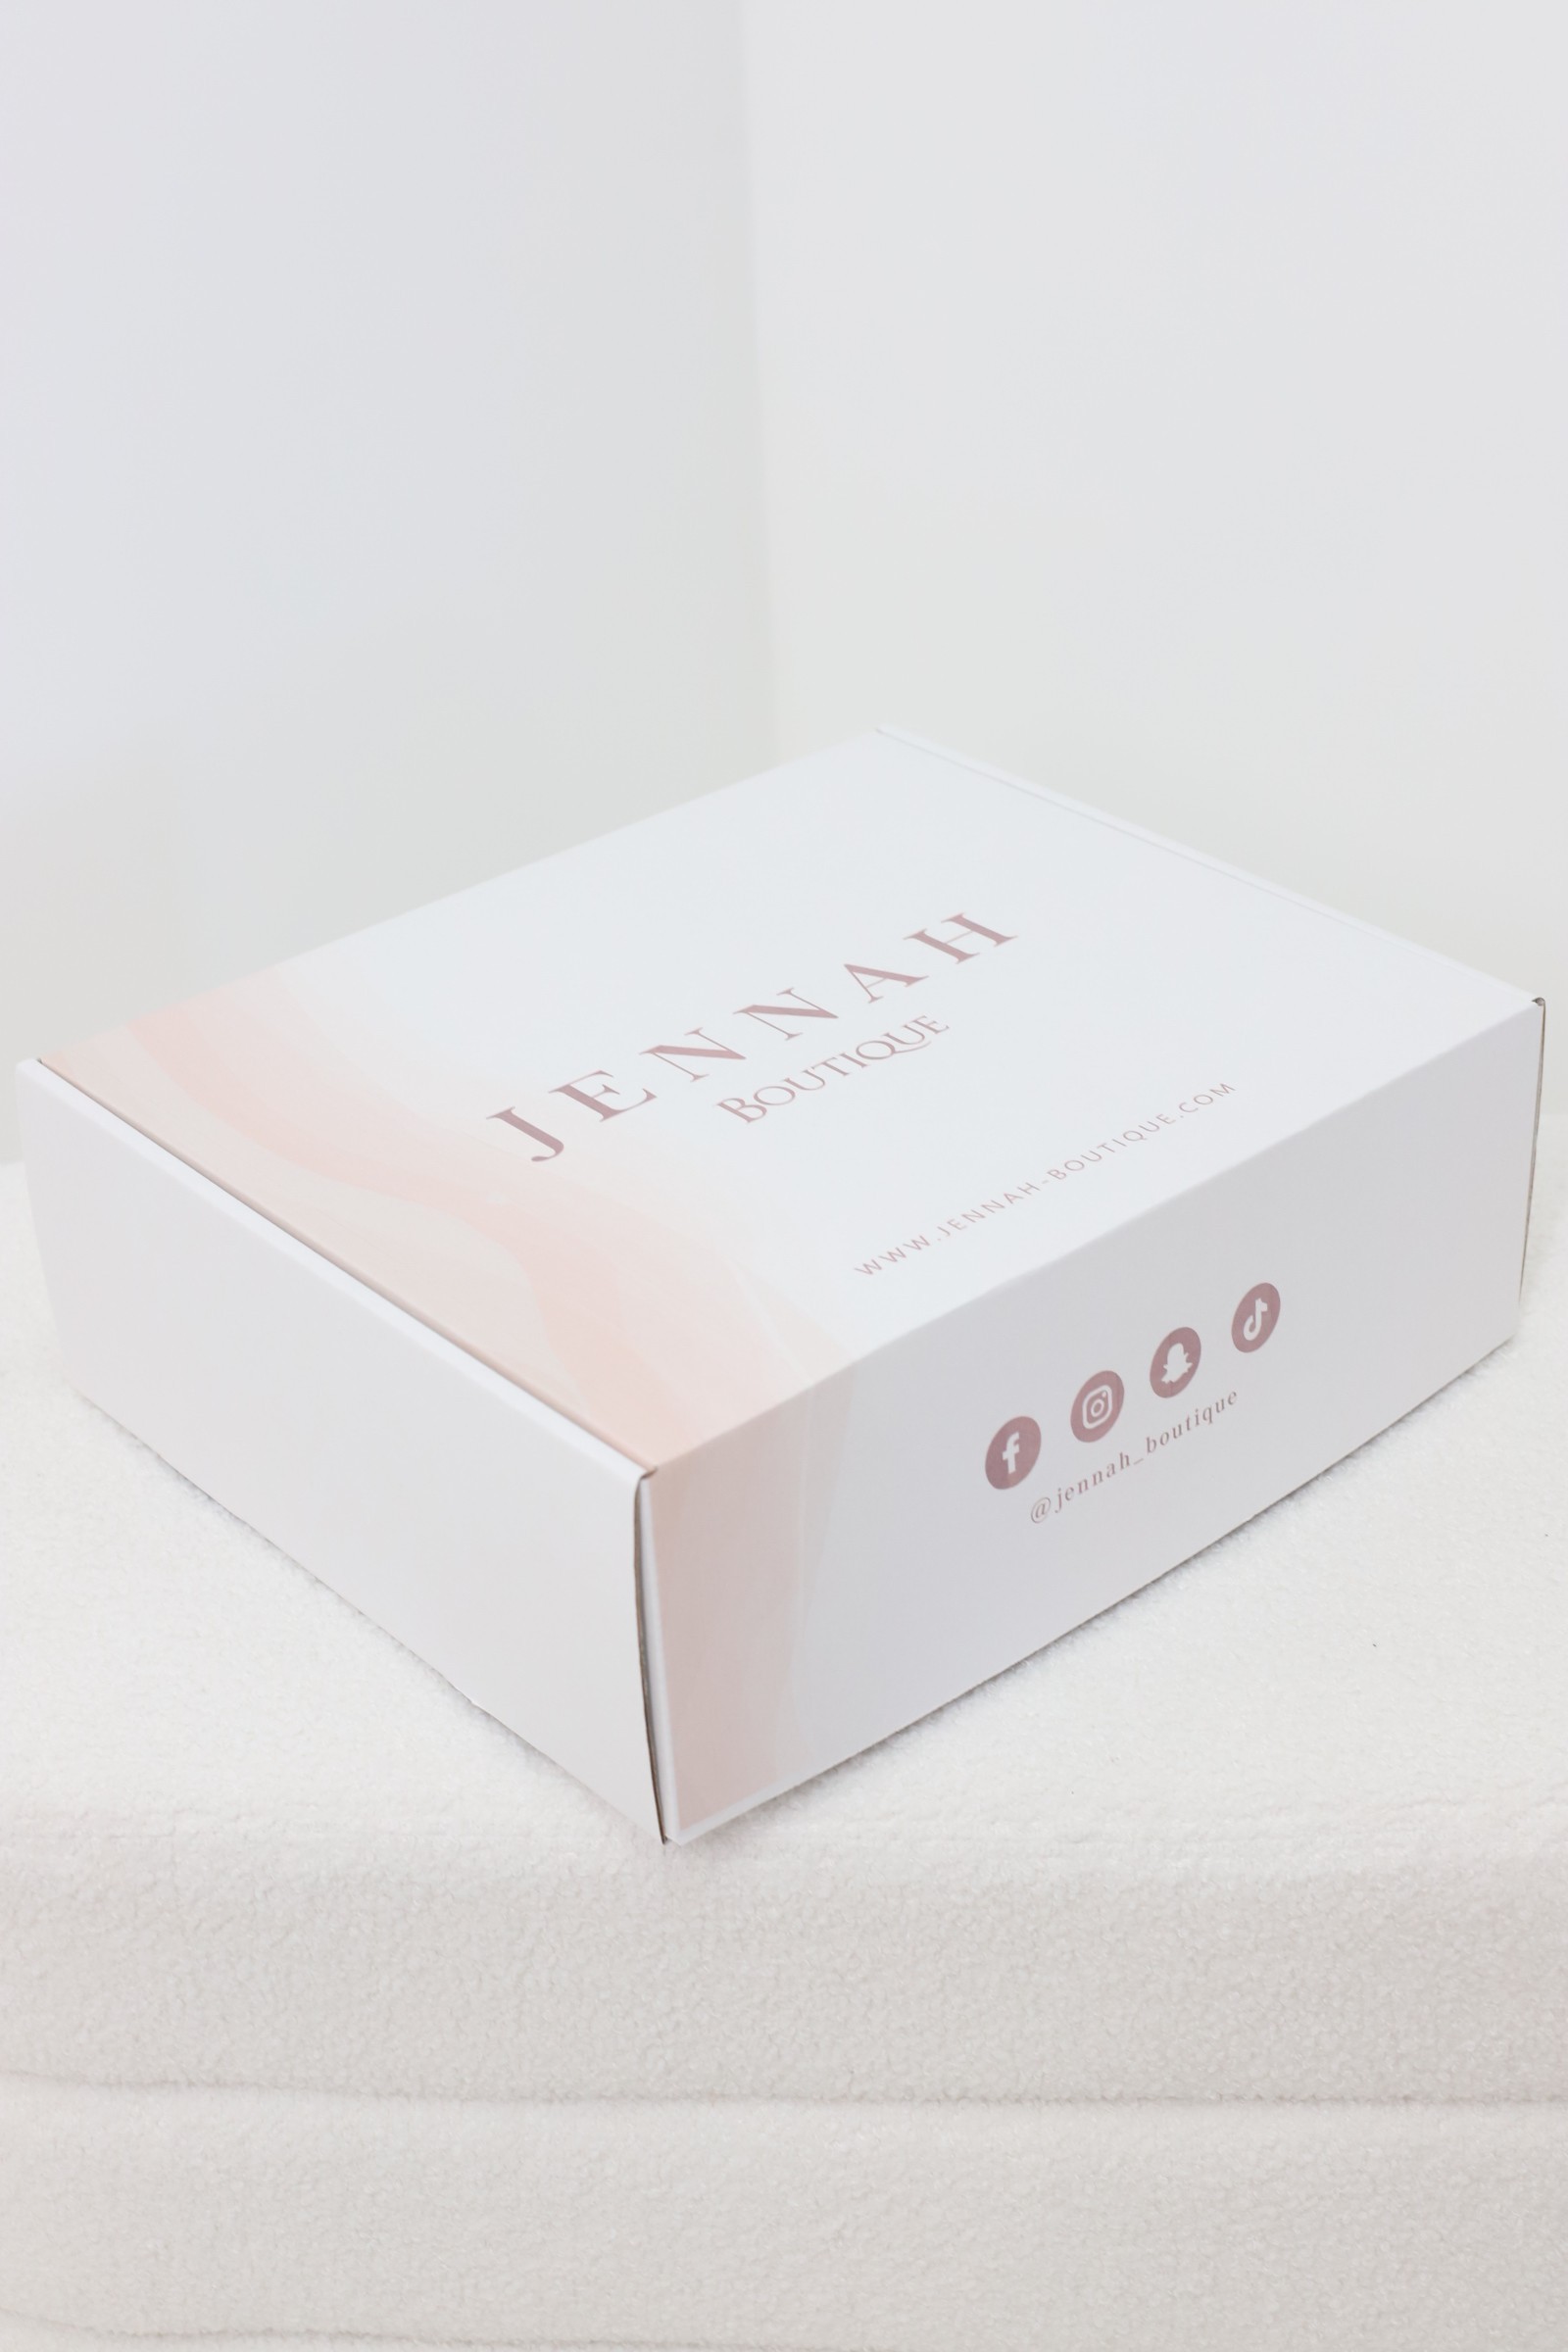  Cheap hijab gift box for women hijab